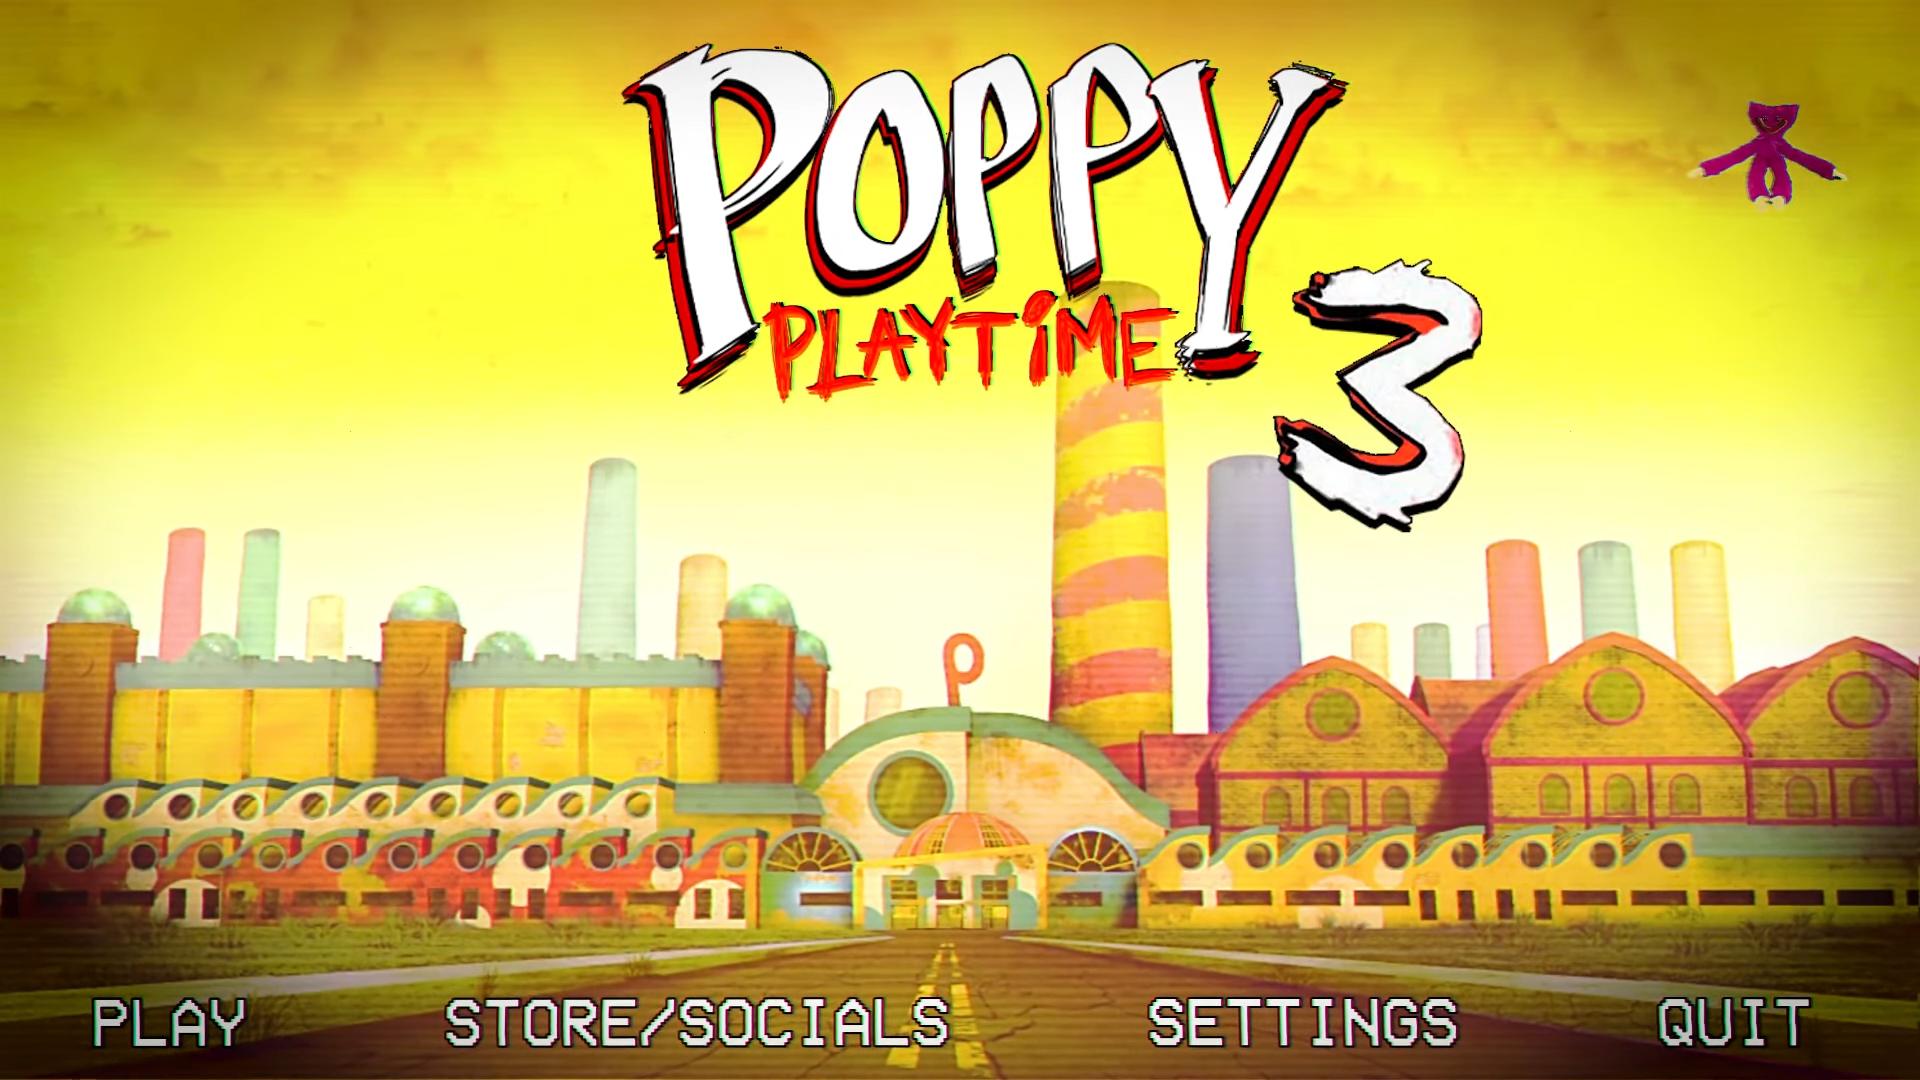 Поппи плейтайм 3 глент. Poppy Playtime игра. Завод Poppy Play time. Фабрика из игры Poppy Playtime. Poppy Playtime главное меню.